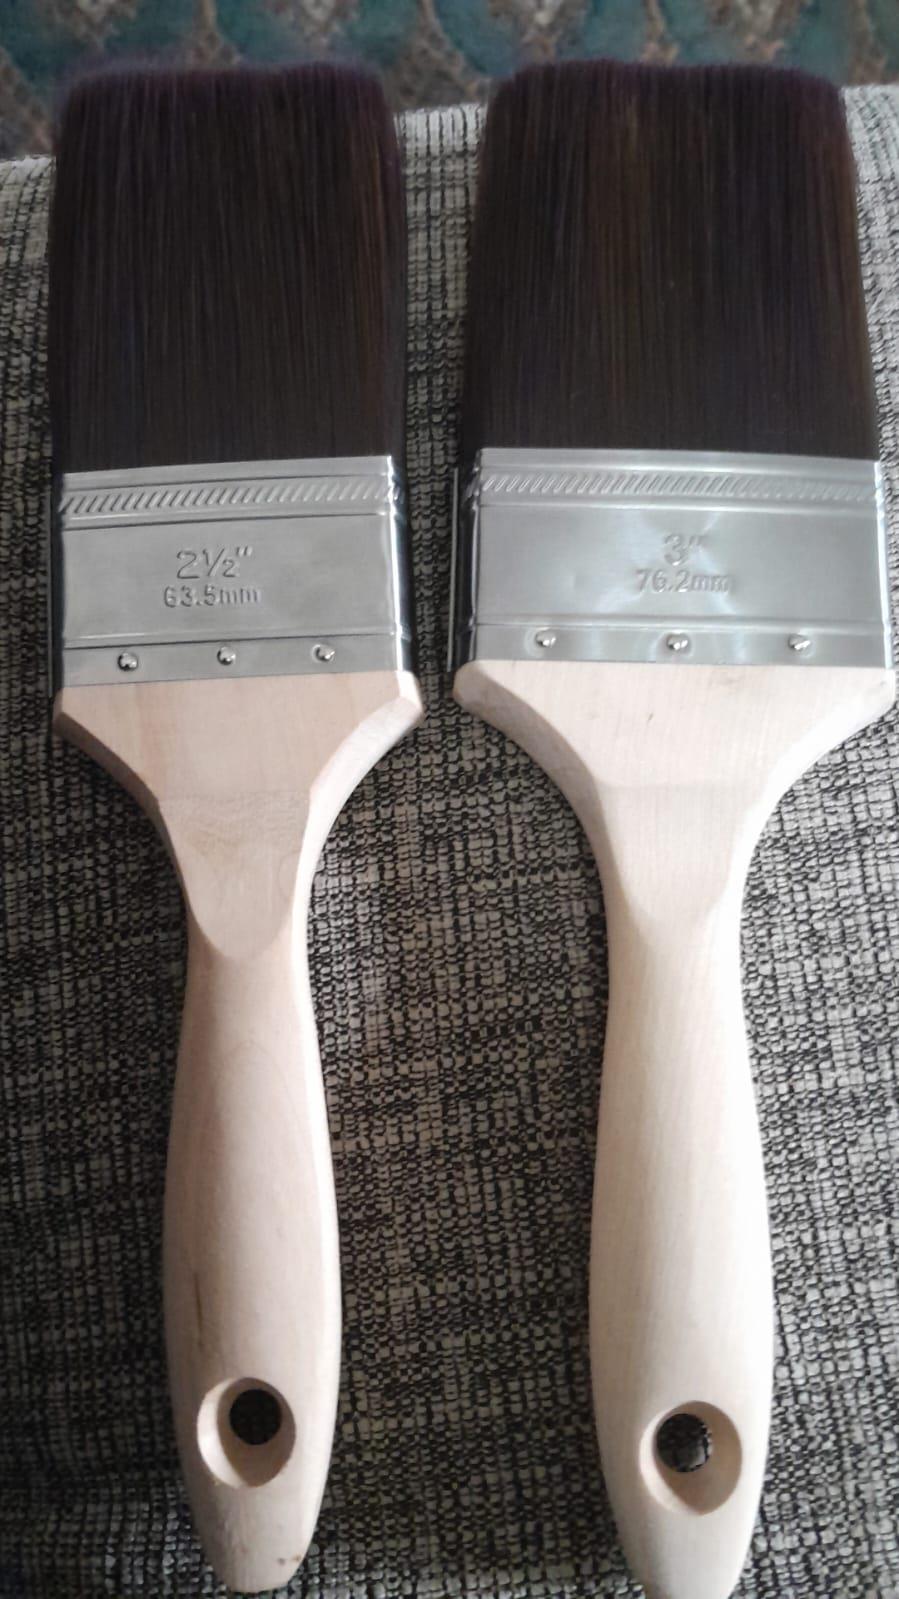 Flat Filament Paint Brush ,Short Wood Handle Paint Brush